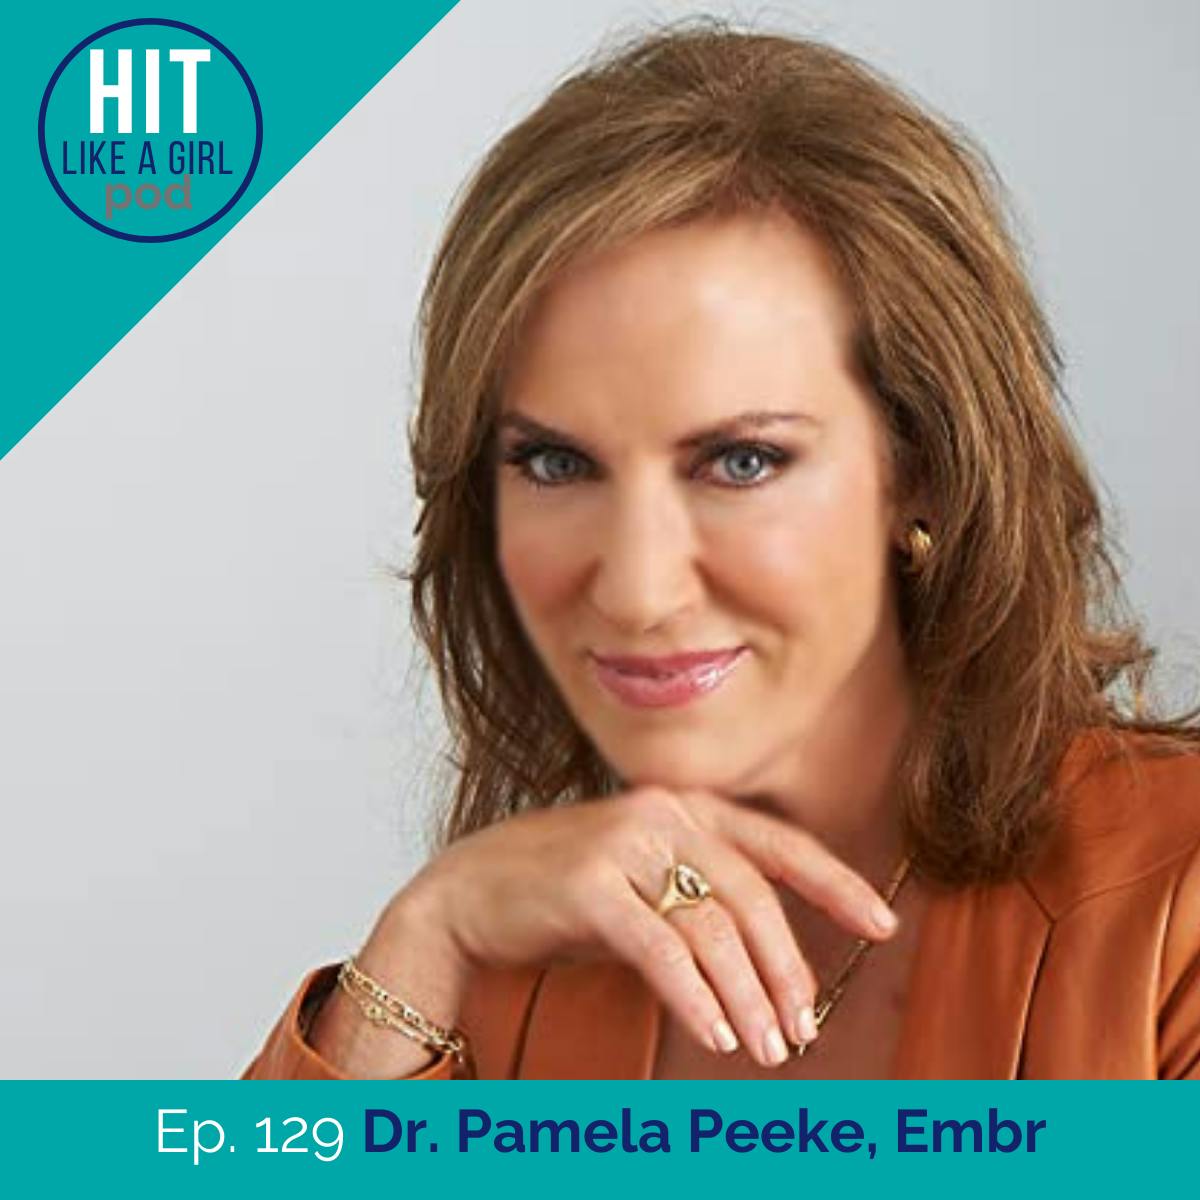 Dr. Pamela Peeke shares a bio-hack to control body temperature